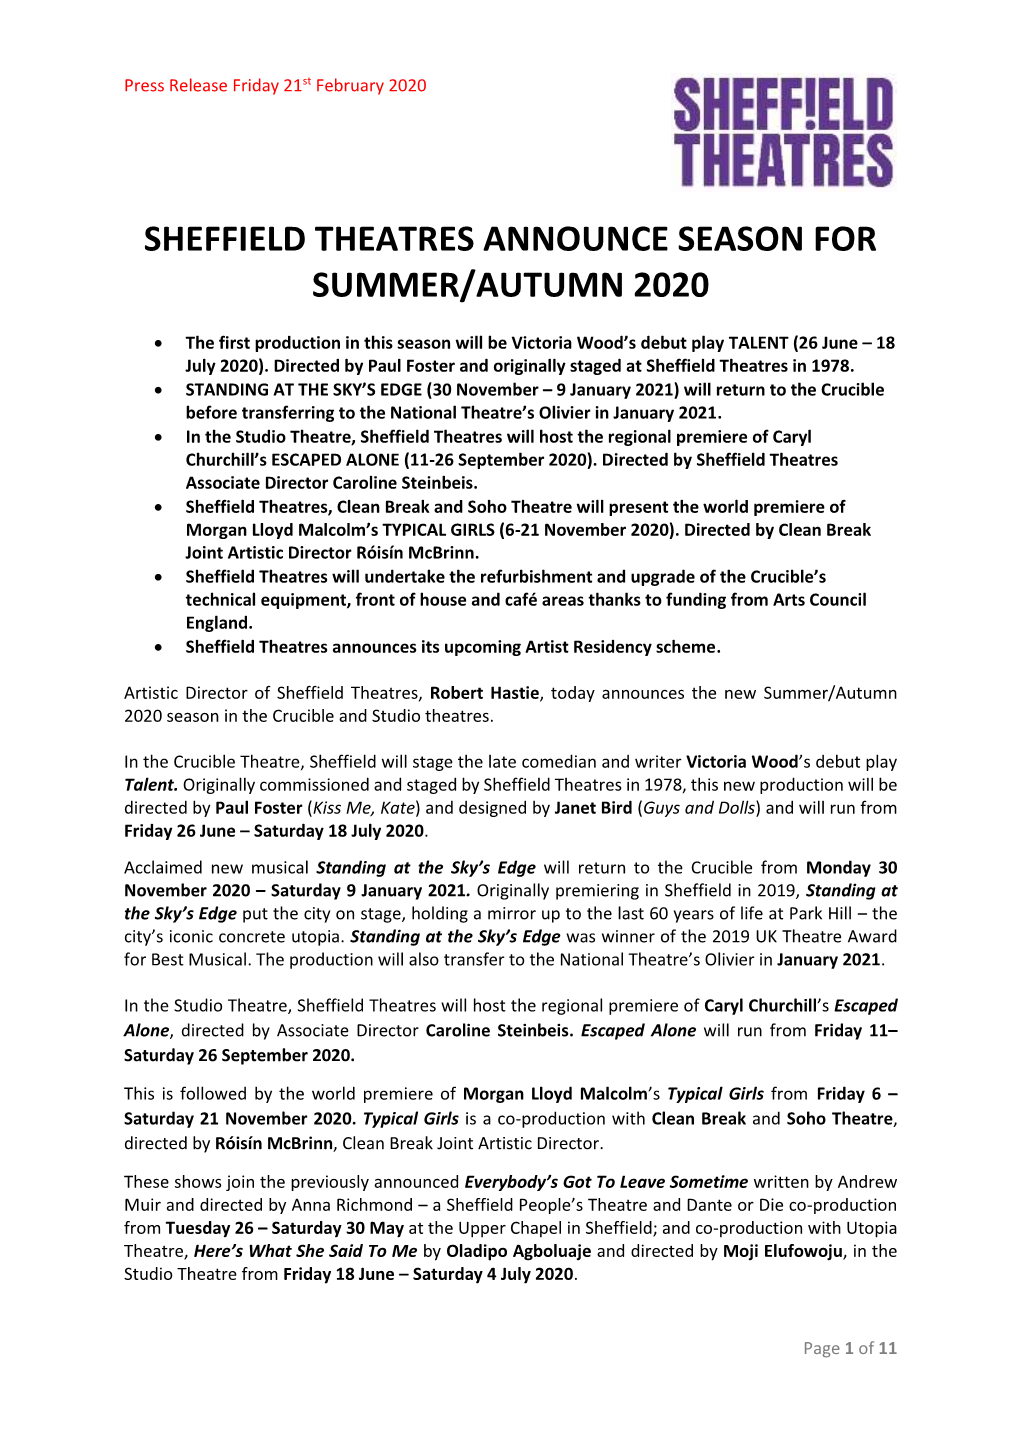 Sheffield Theatres Announce Season for Summer/Autumn 2020